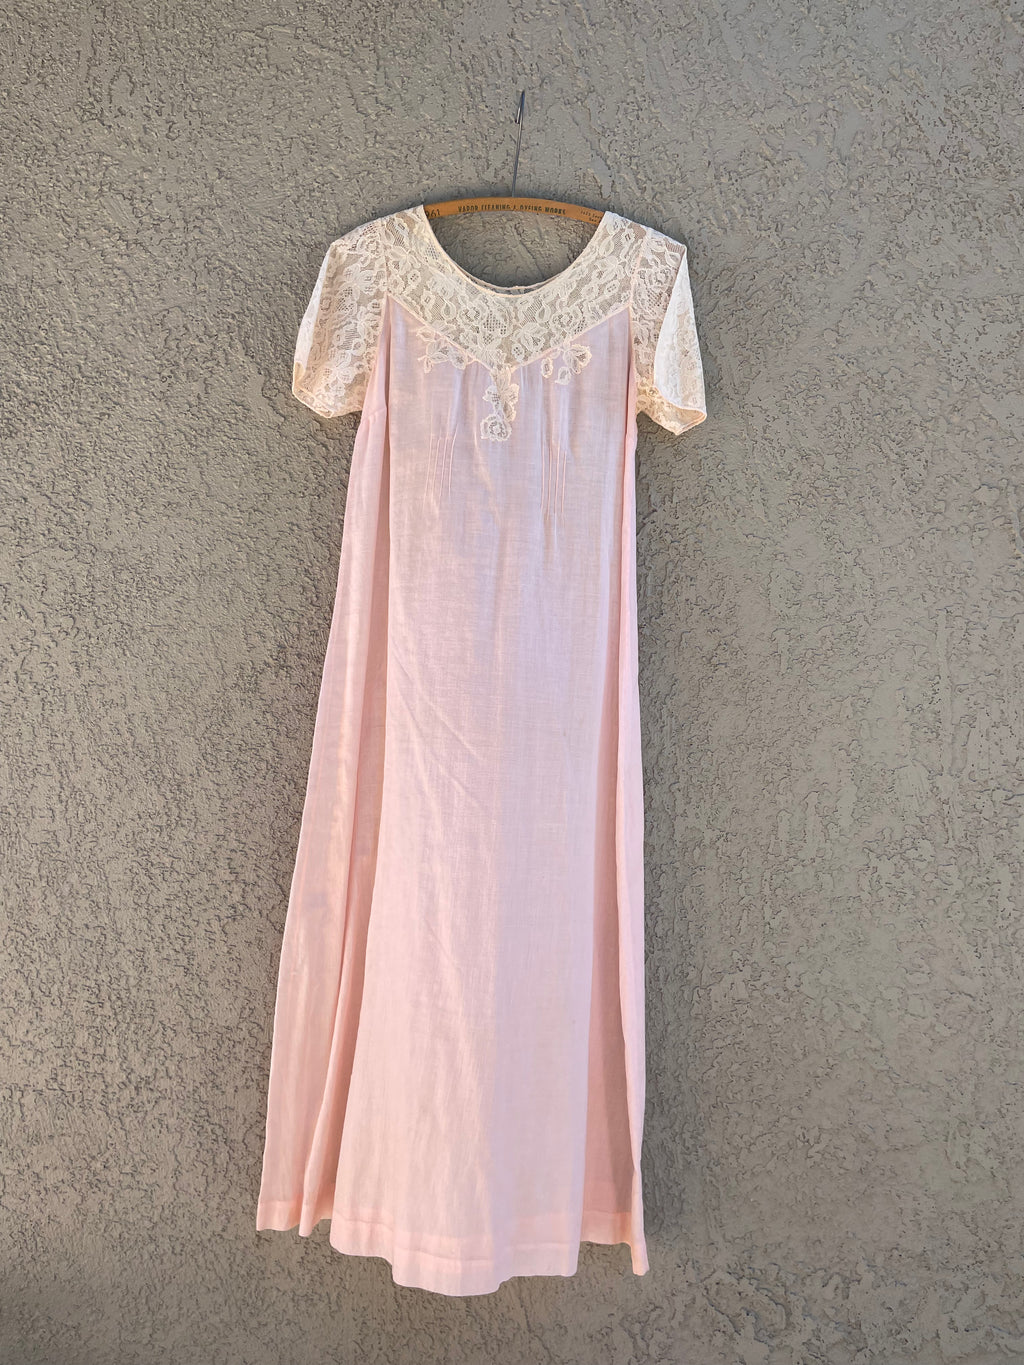 Edwardian Ballet Pink Inset Lace Chemise Dress